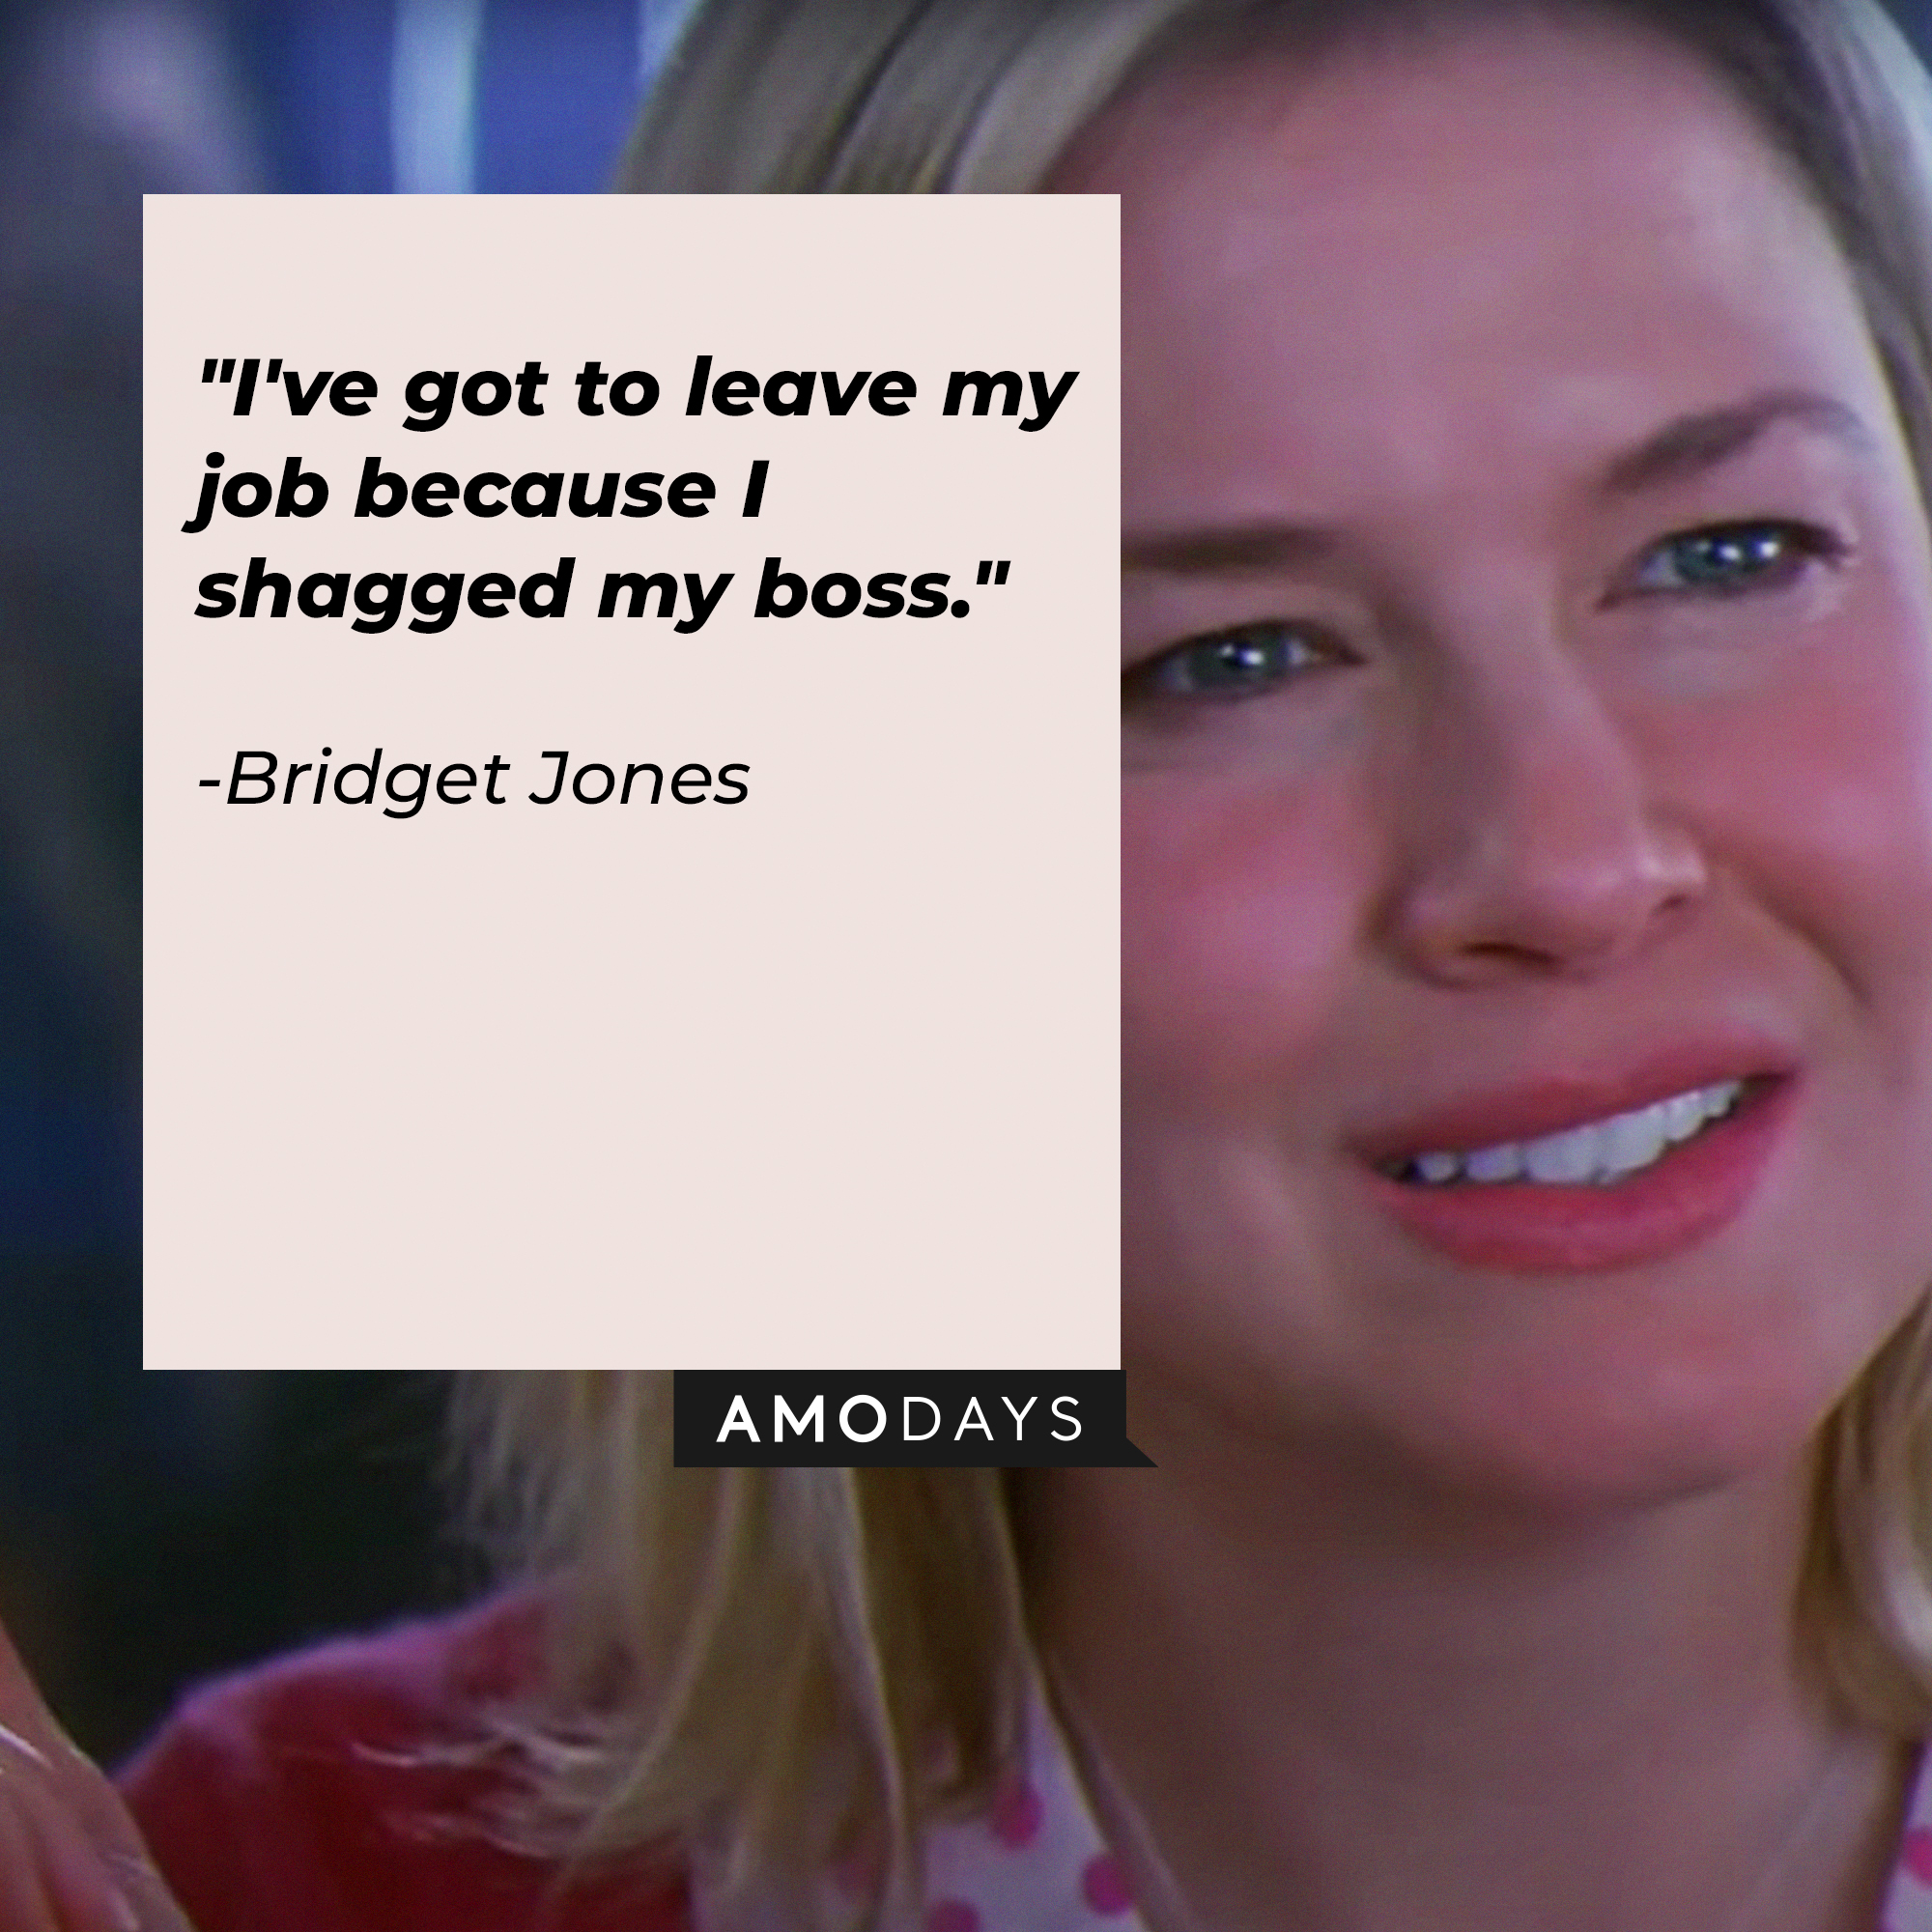 Bridget Jones with her quote in "Bridget Jones's Diary:" "I've got to leave my job because I shagged my boss." | Source: Facebook/BridgetJonessDiary